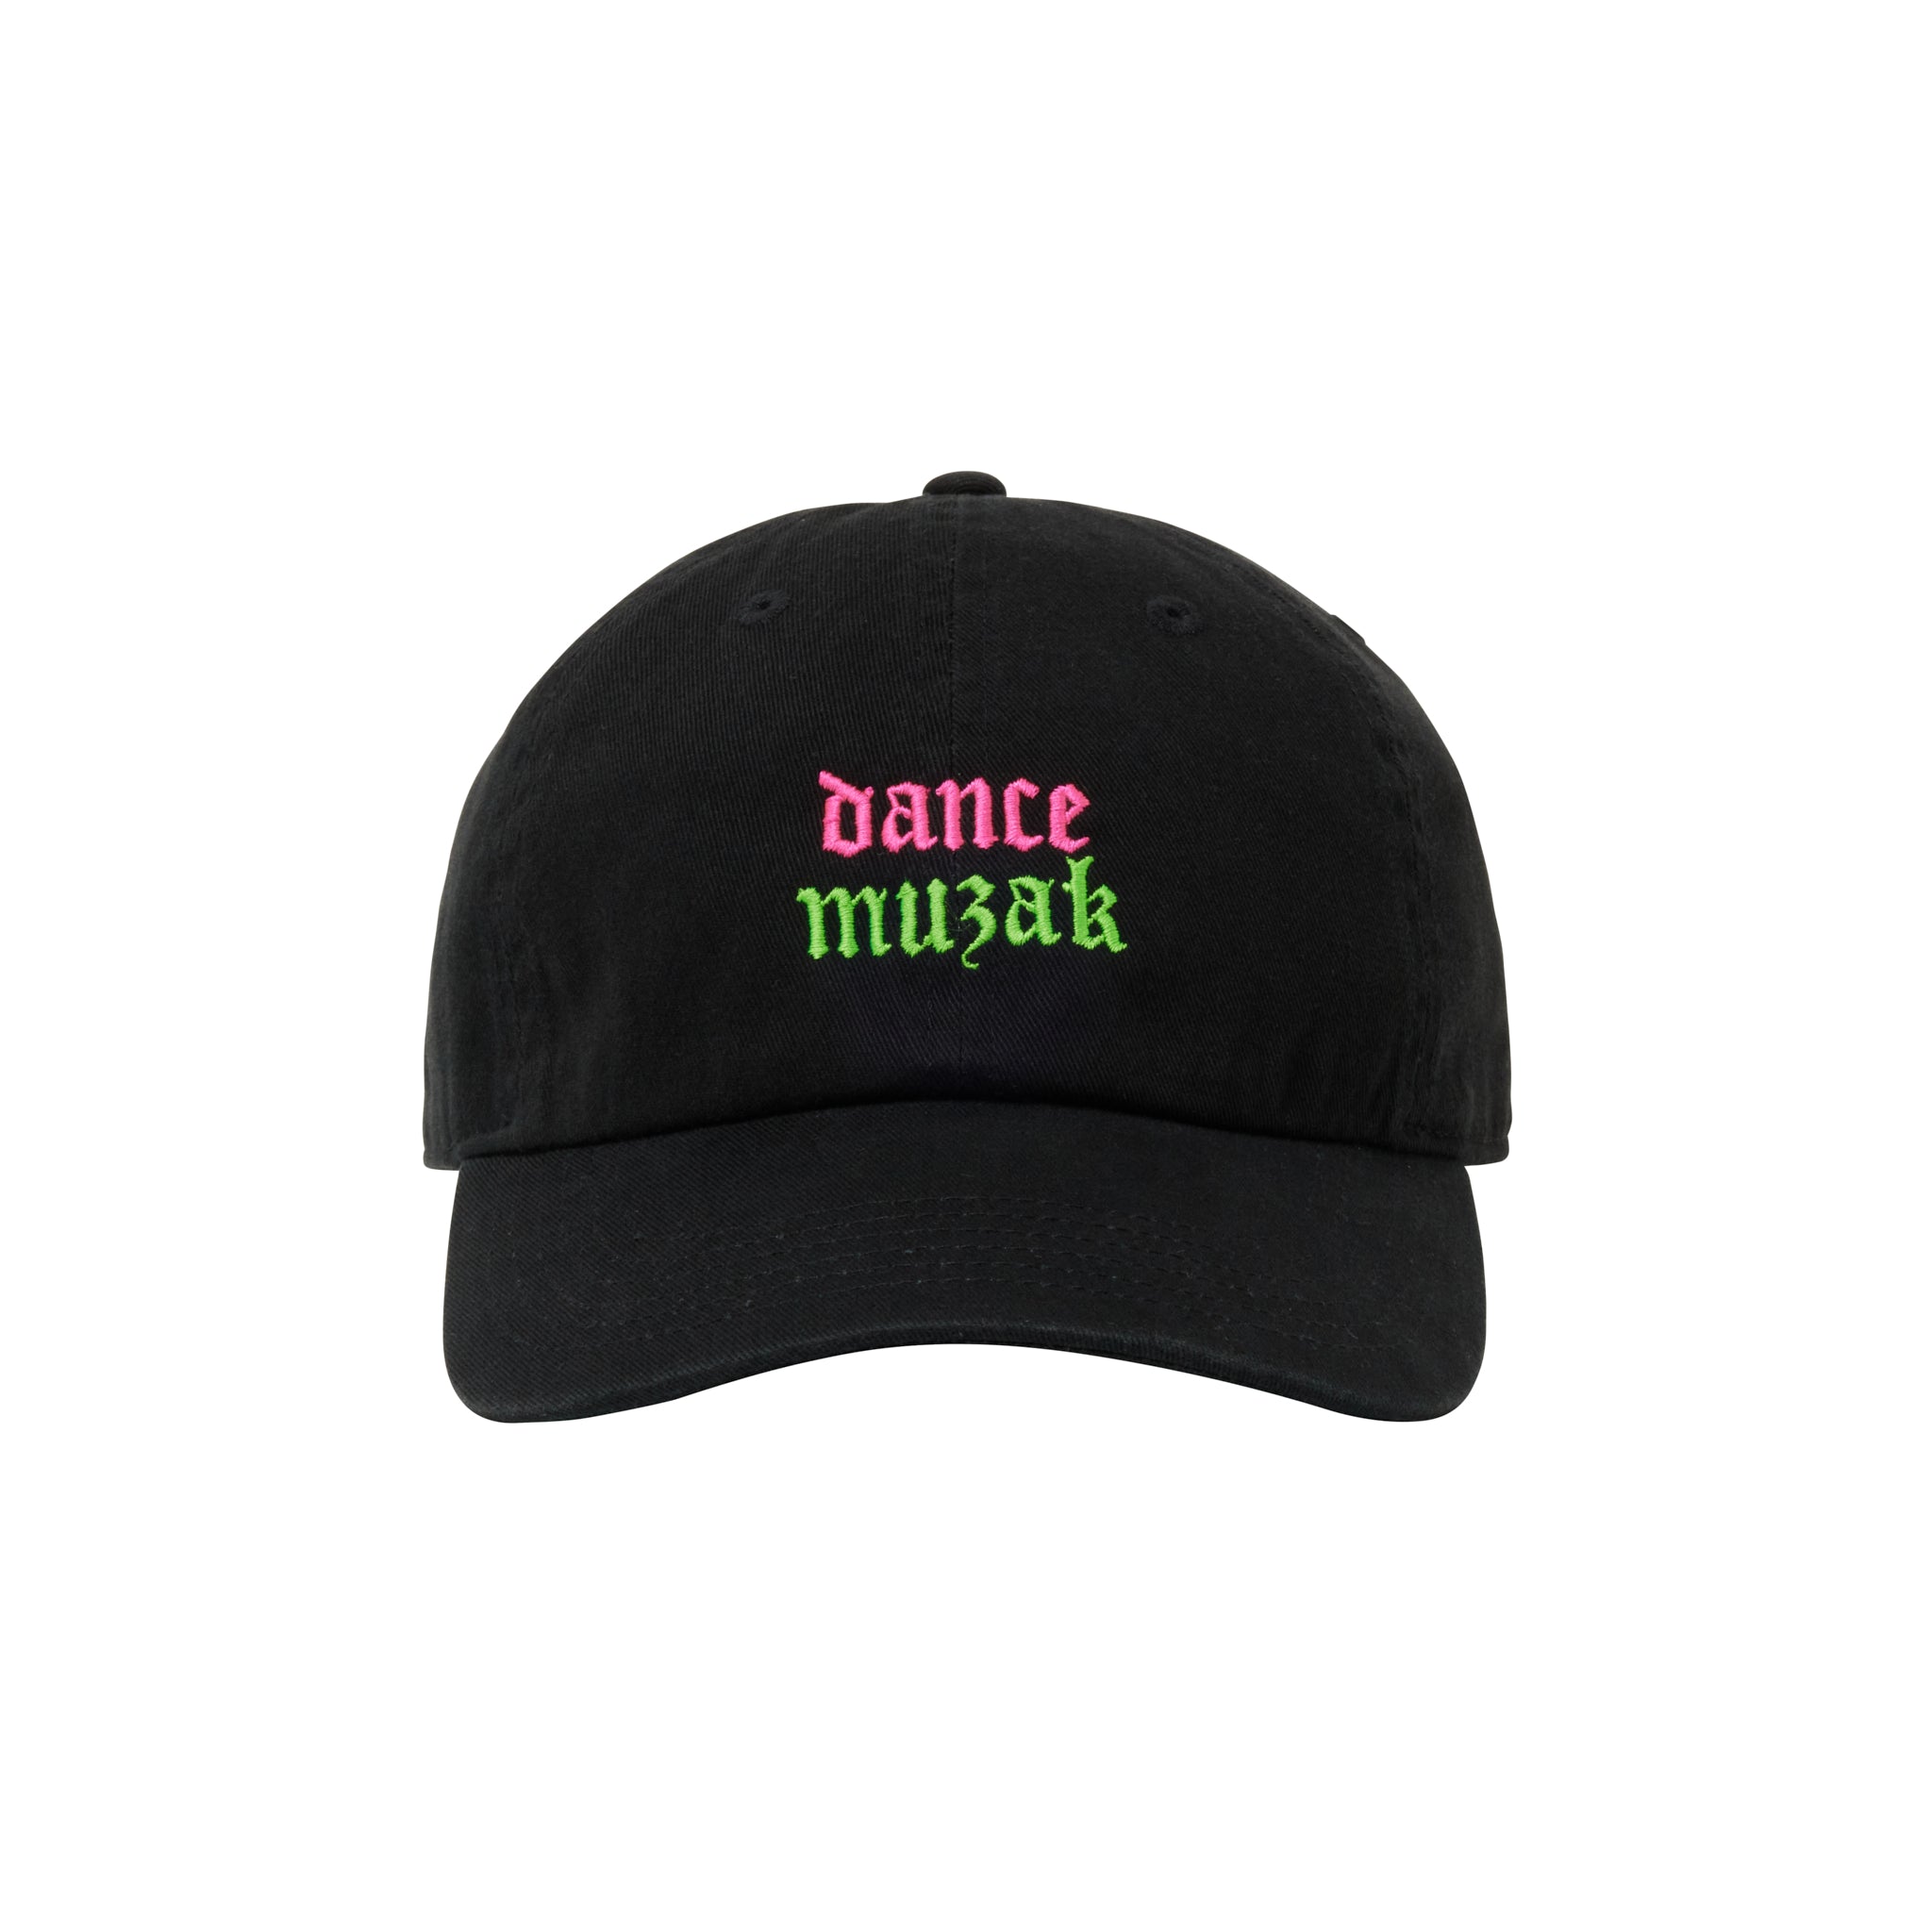 TOMOO GOKITA - 'dance muzak' BASEBALL CAP